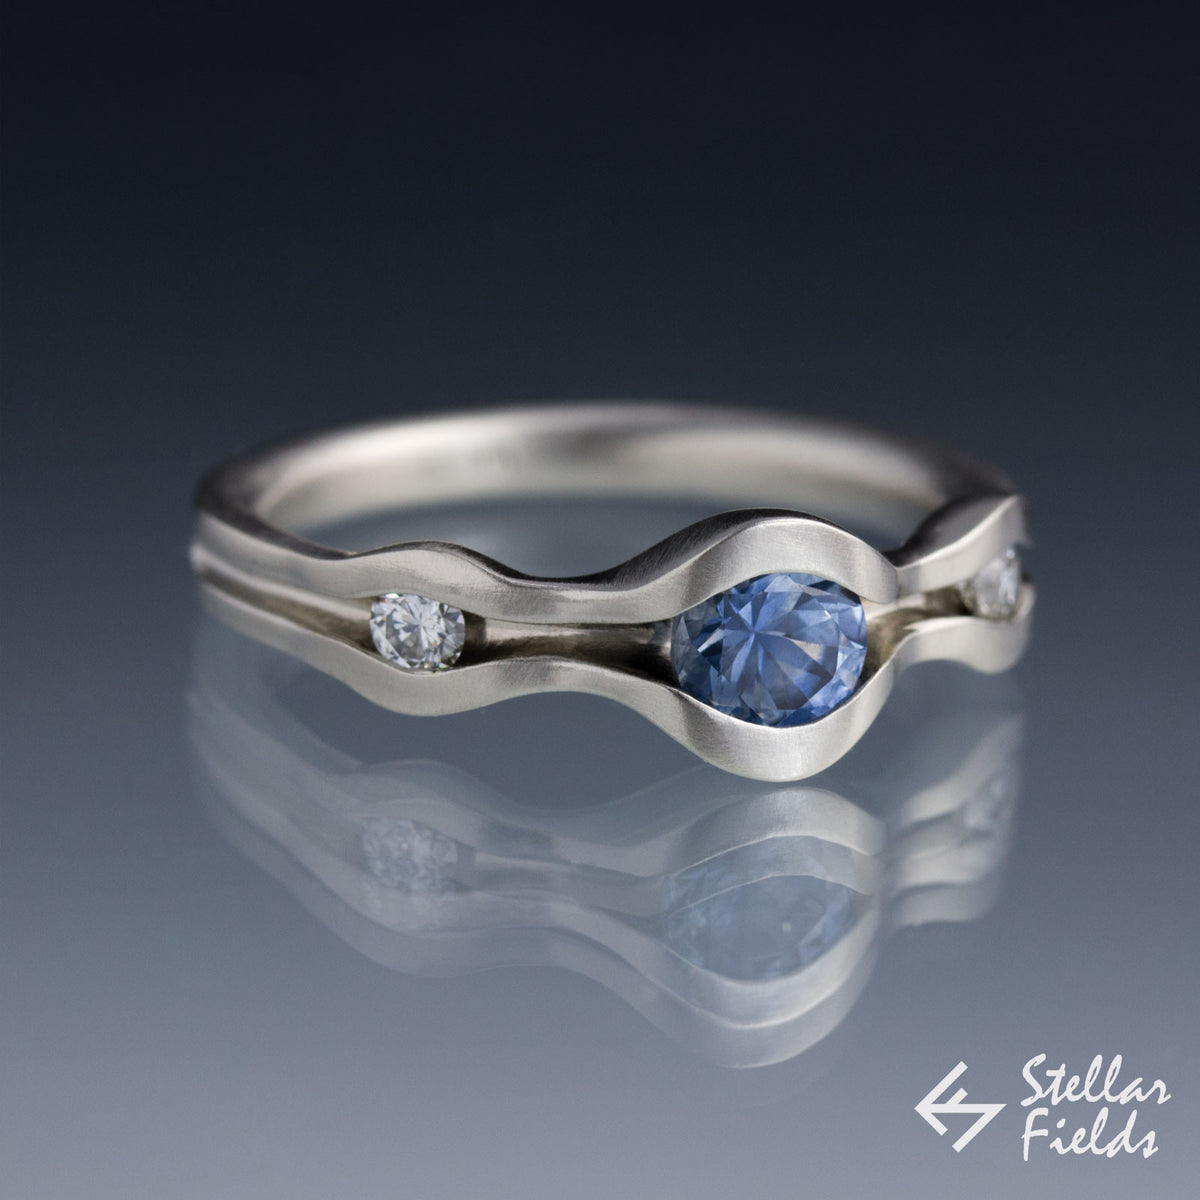 Blue Montana Sapphire Wave Engagement Ring White Gold Platinum Stellar Fields